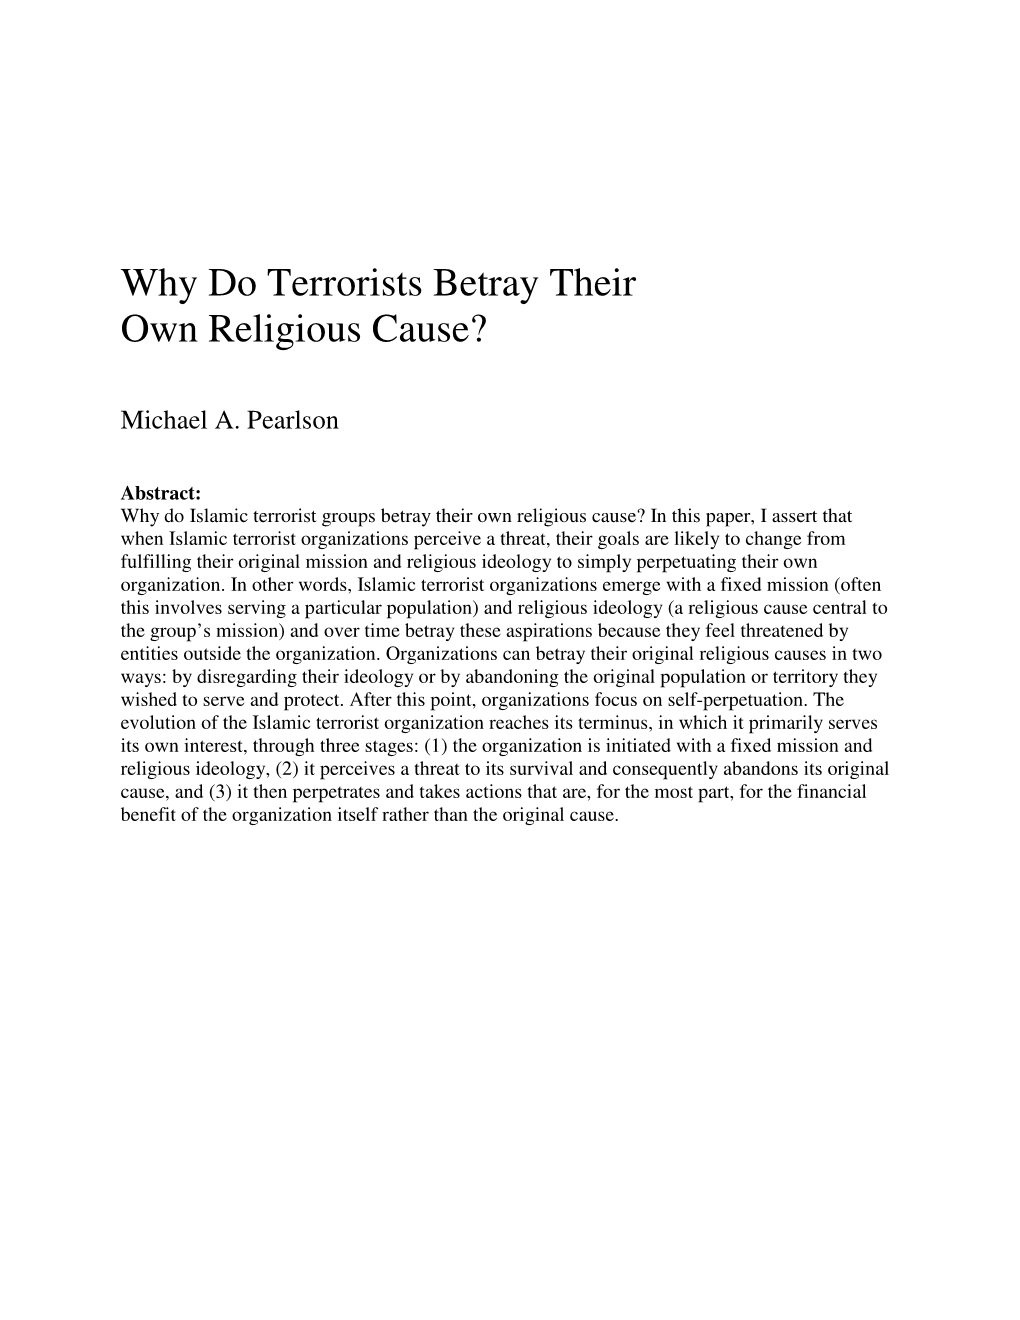 Why Do Terrorists Betray Their Own Religious Cause?